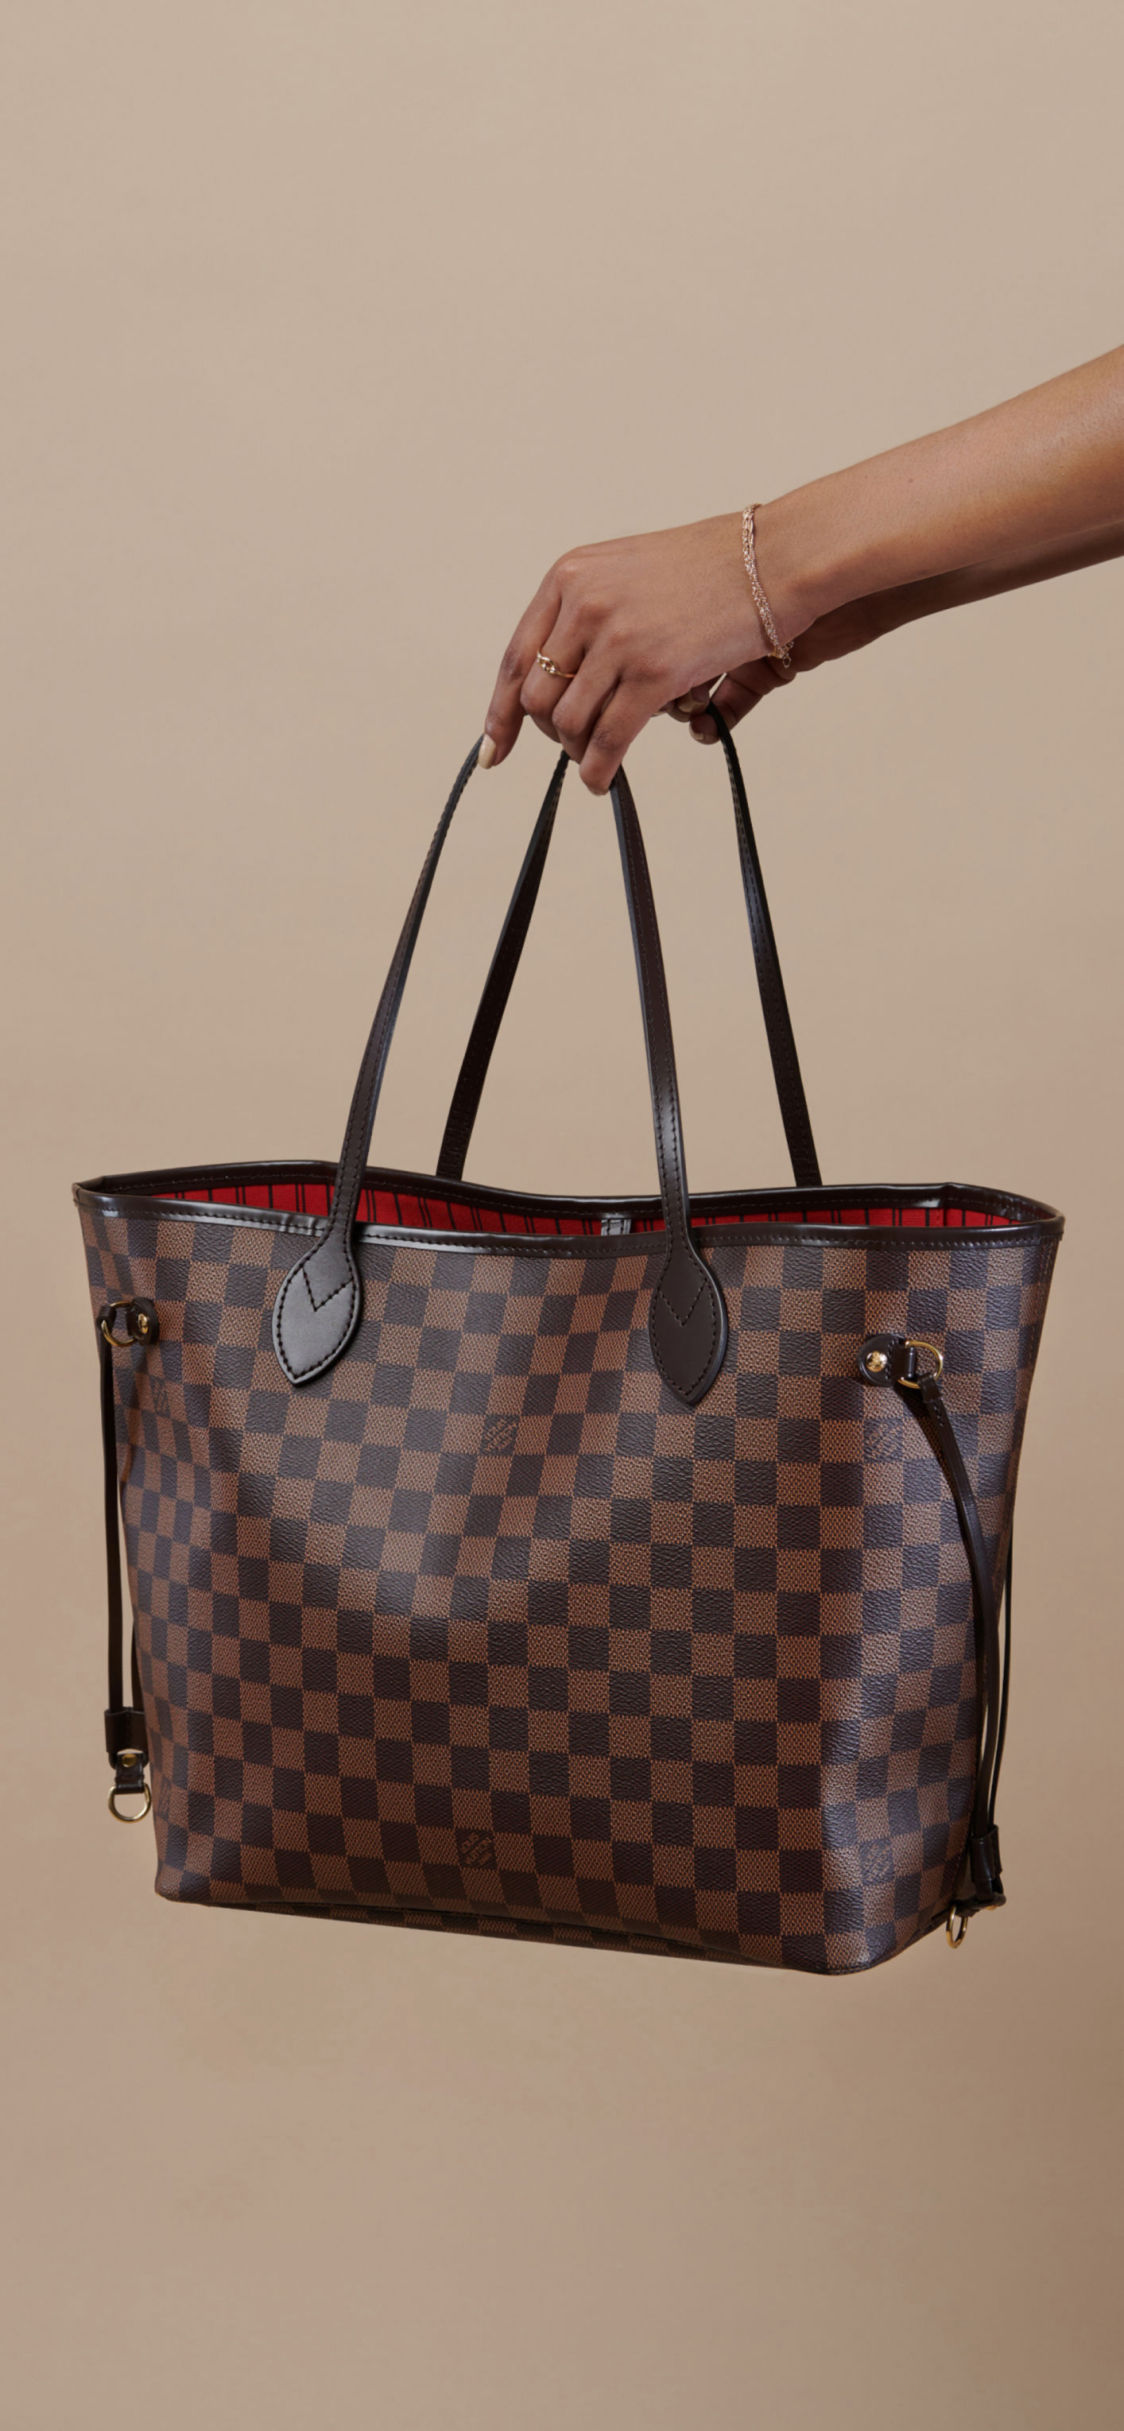 How To Clean Louis Vuitton Damier Ebene Canvas Bag